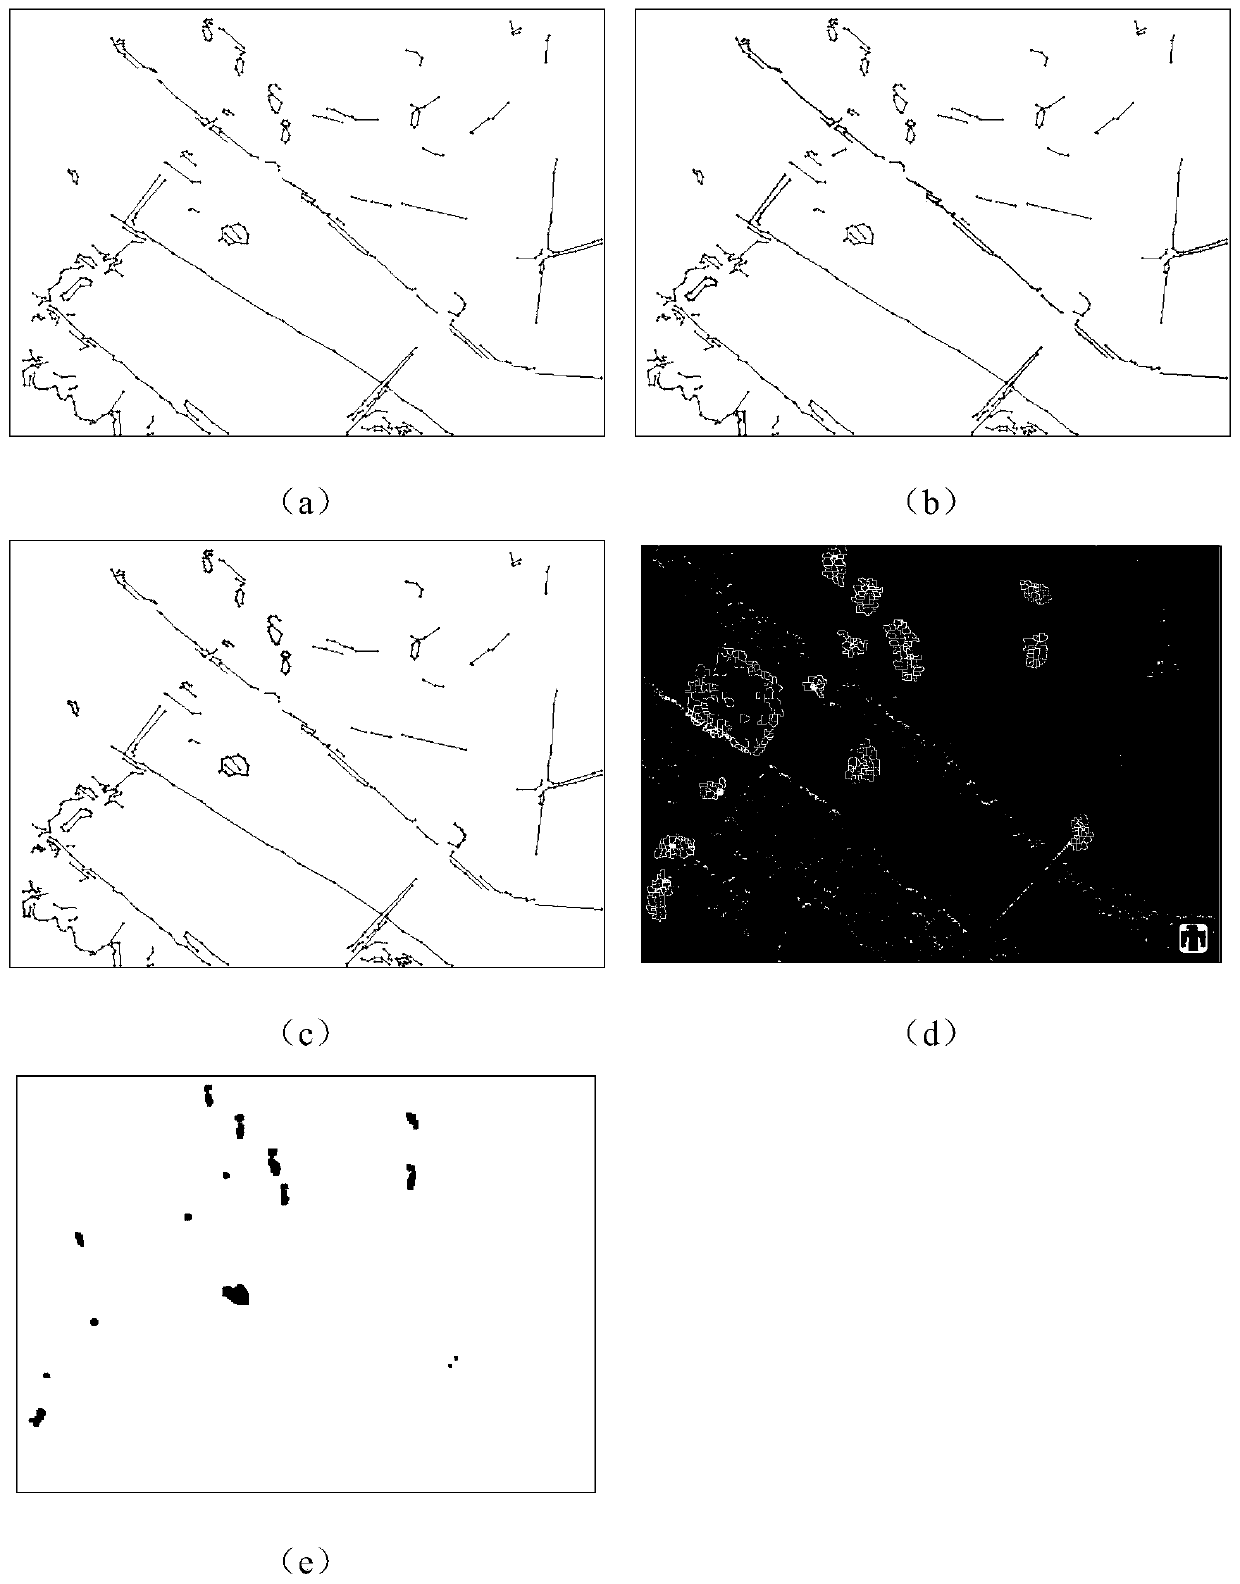 SAR Image Segmentation Method Based on Ridgelet Filter and Convolution Structure Learning Model